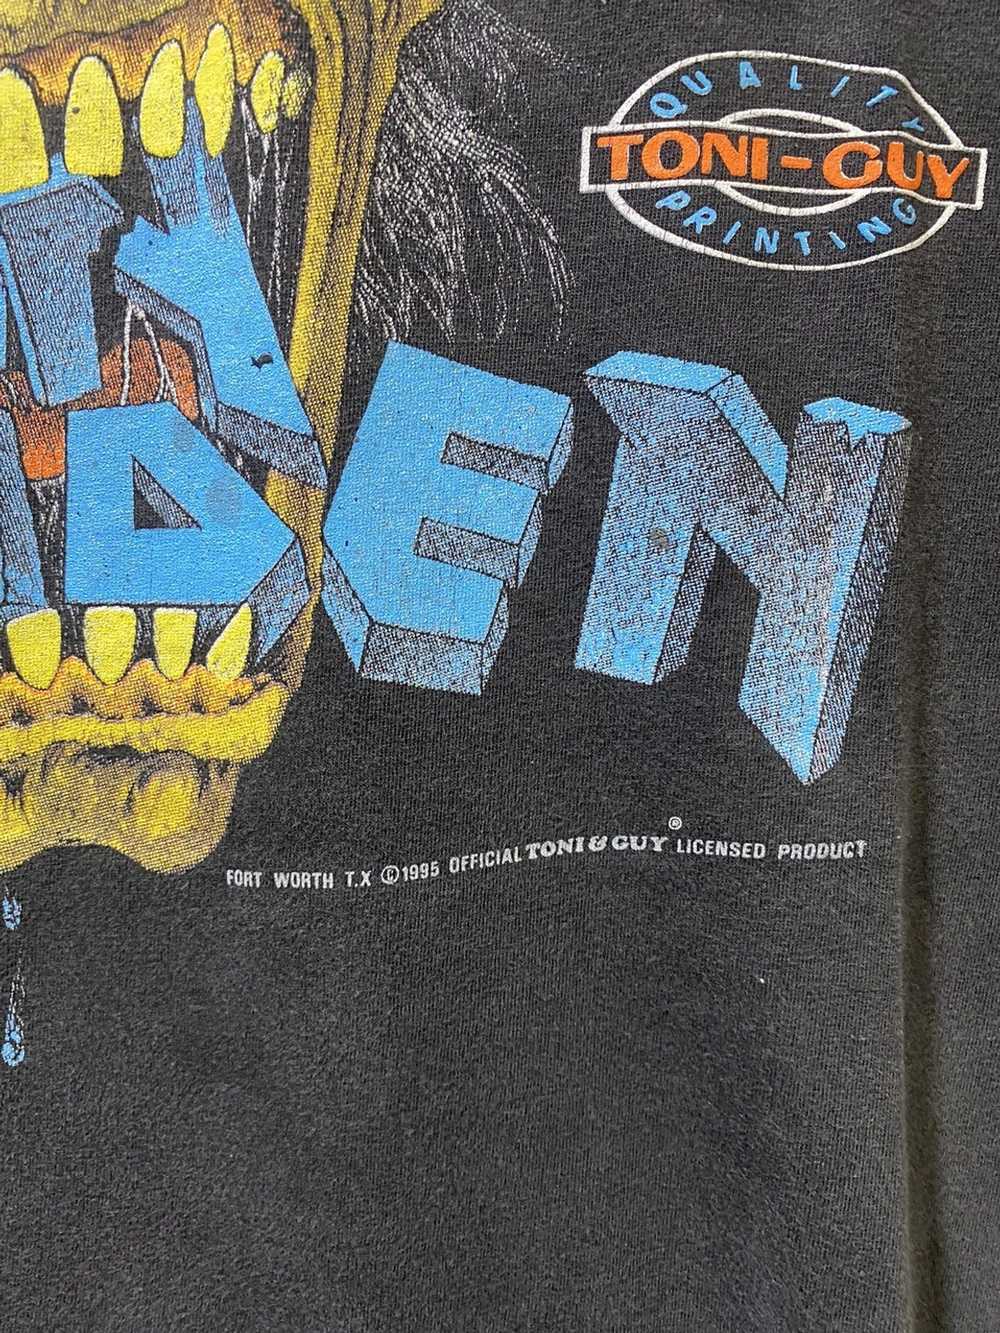 Rock Band × Vintage Iron Maiden 90s - image 3